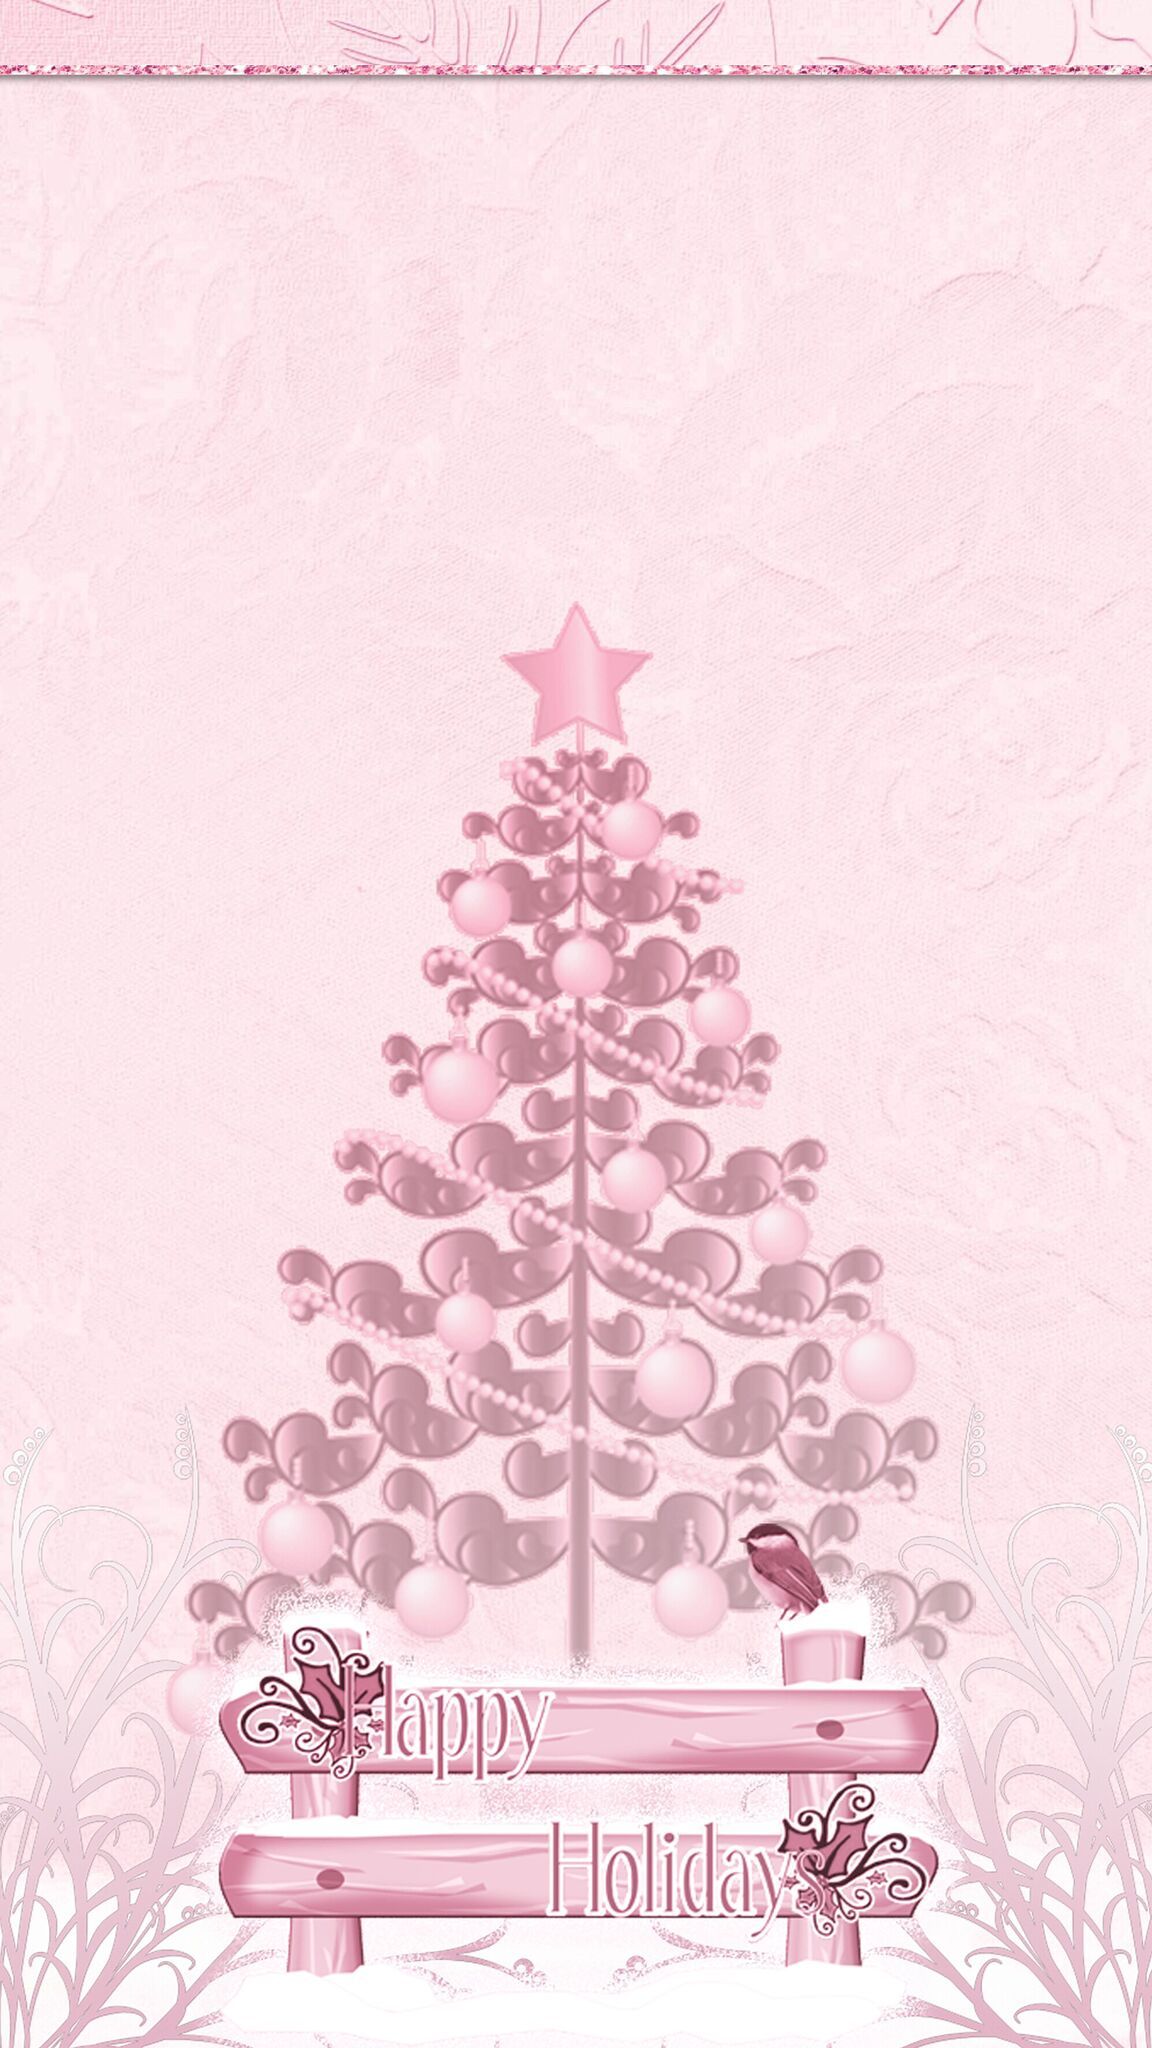 iPhone Wall: Christmas tjn. Wallpaper iphone christmas, Xmas wallpaper, Christmas wallpaper